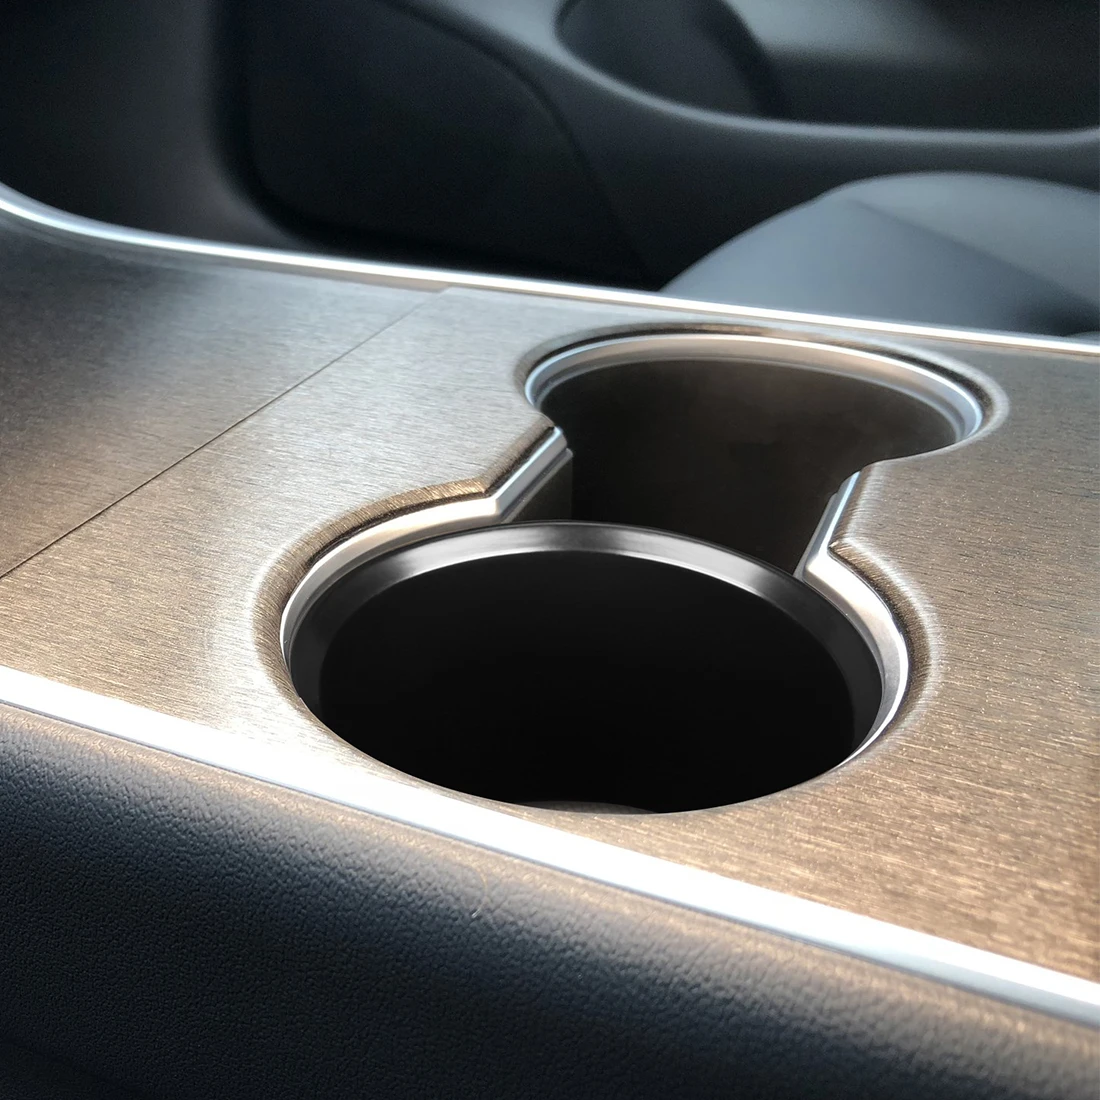 Car Drink Holder Water Cup Holder Cover Insert Expander Adapter Cup Can Drink Bottle Holders For Tesla Model 3